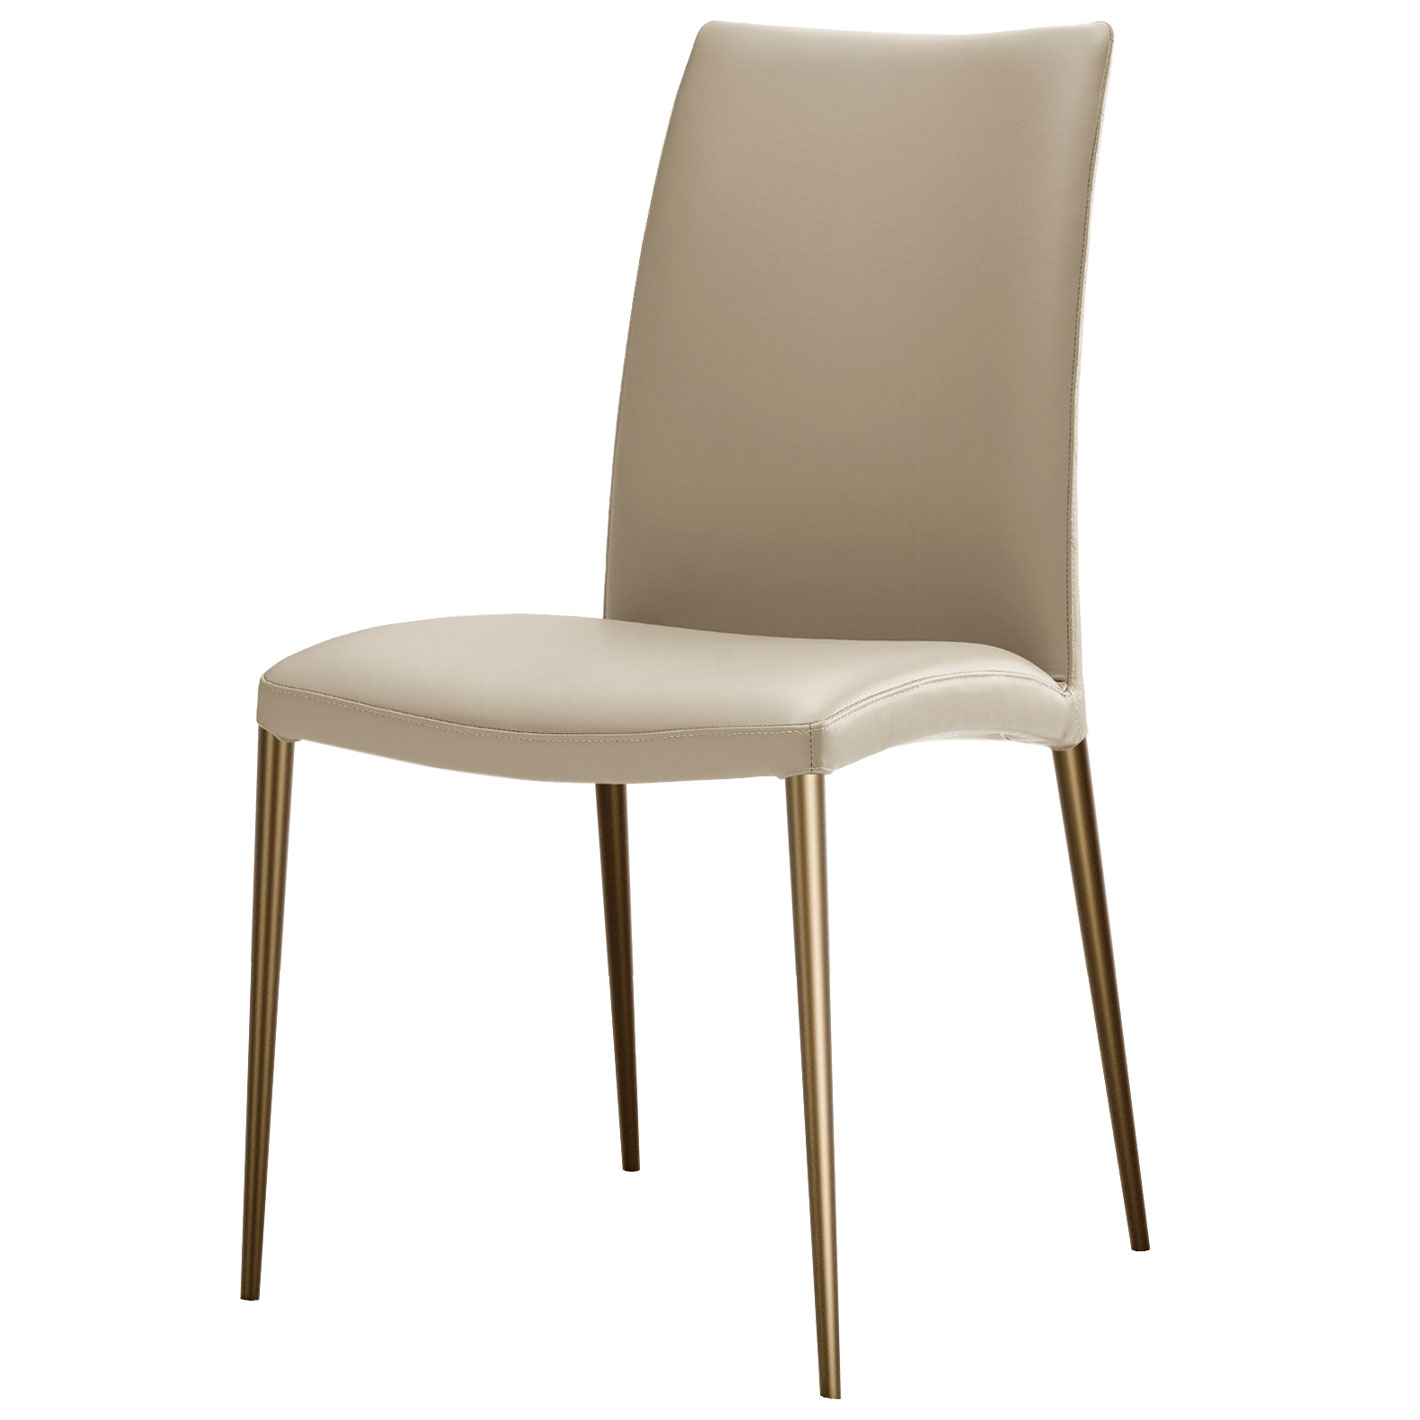 Stühle unter 500 Euro - ASIA METAL Stuhl